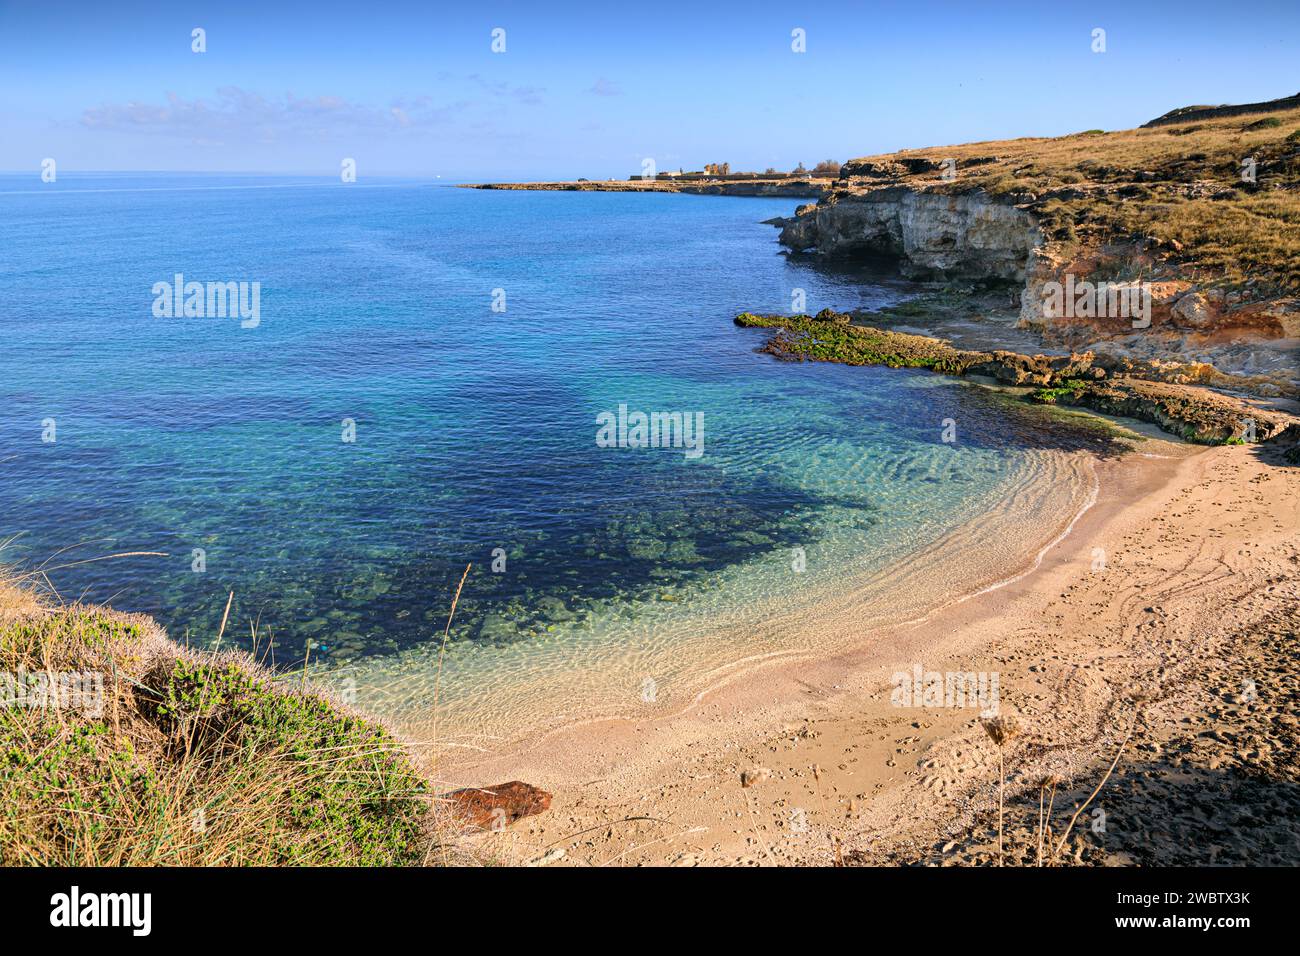 The most beautiful Apulian coast in Italy: Cala Corvino Beach. Typical coastline near Monopoli : high and rocky coast characterized by small sandy cov Stock Photo